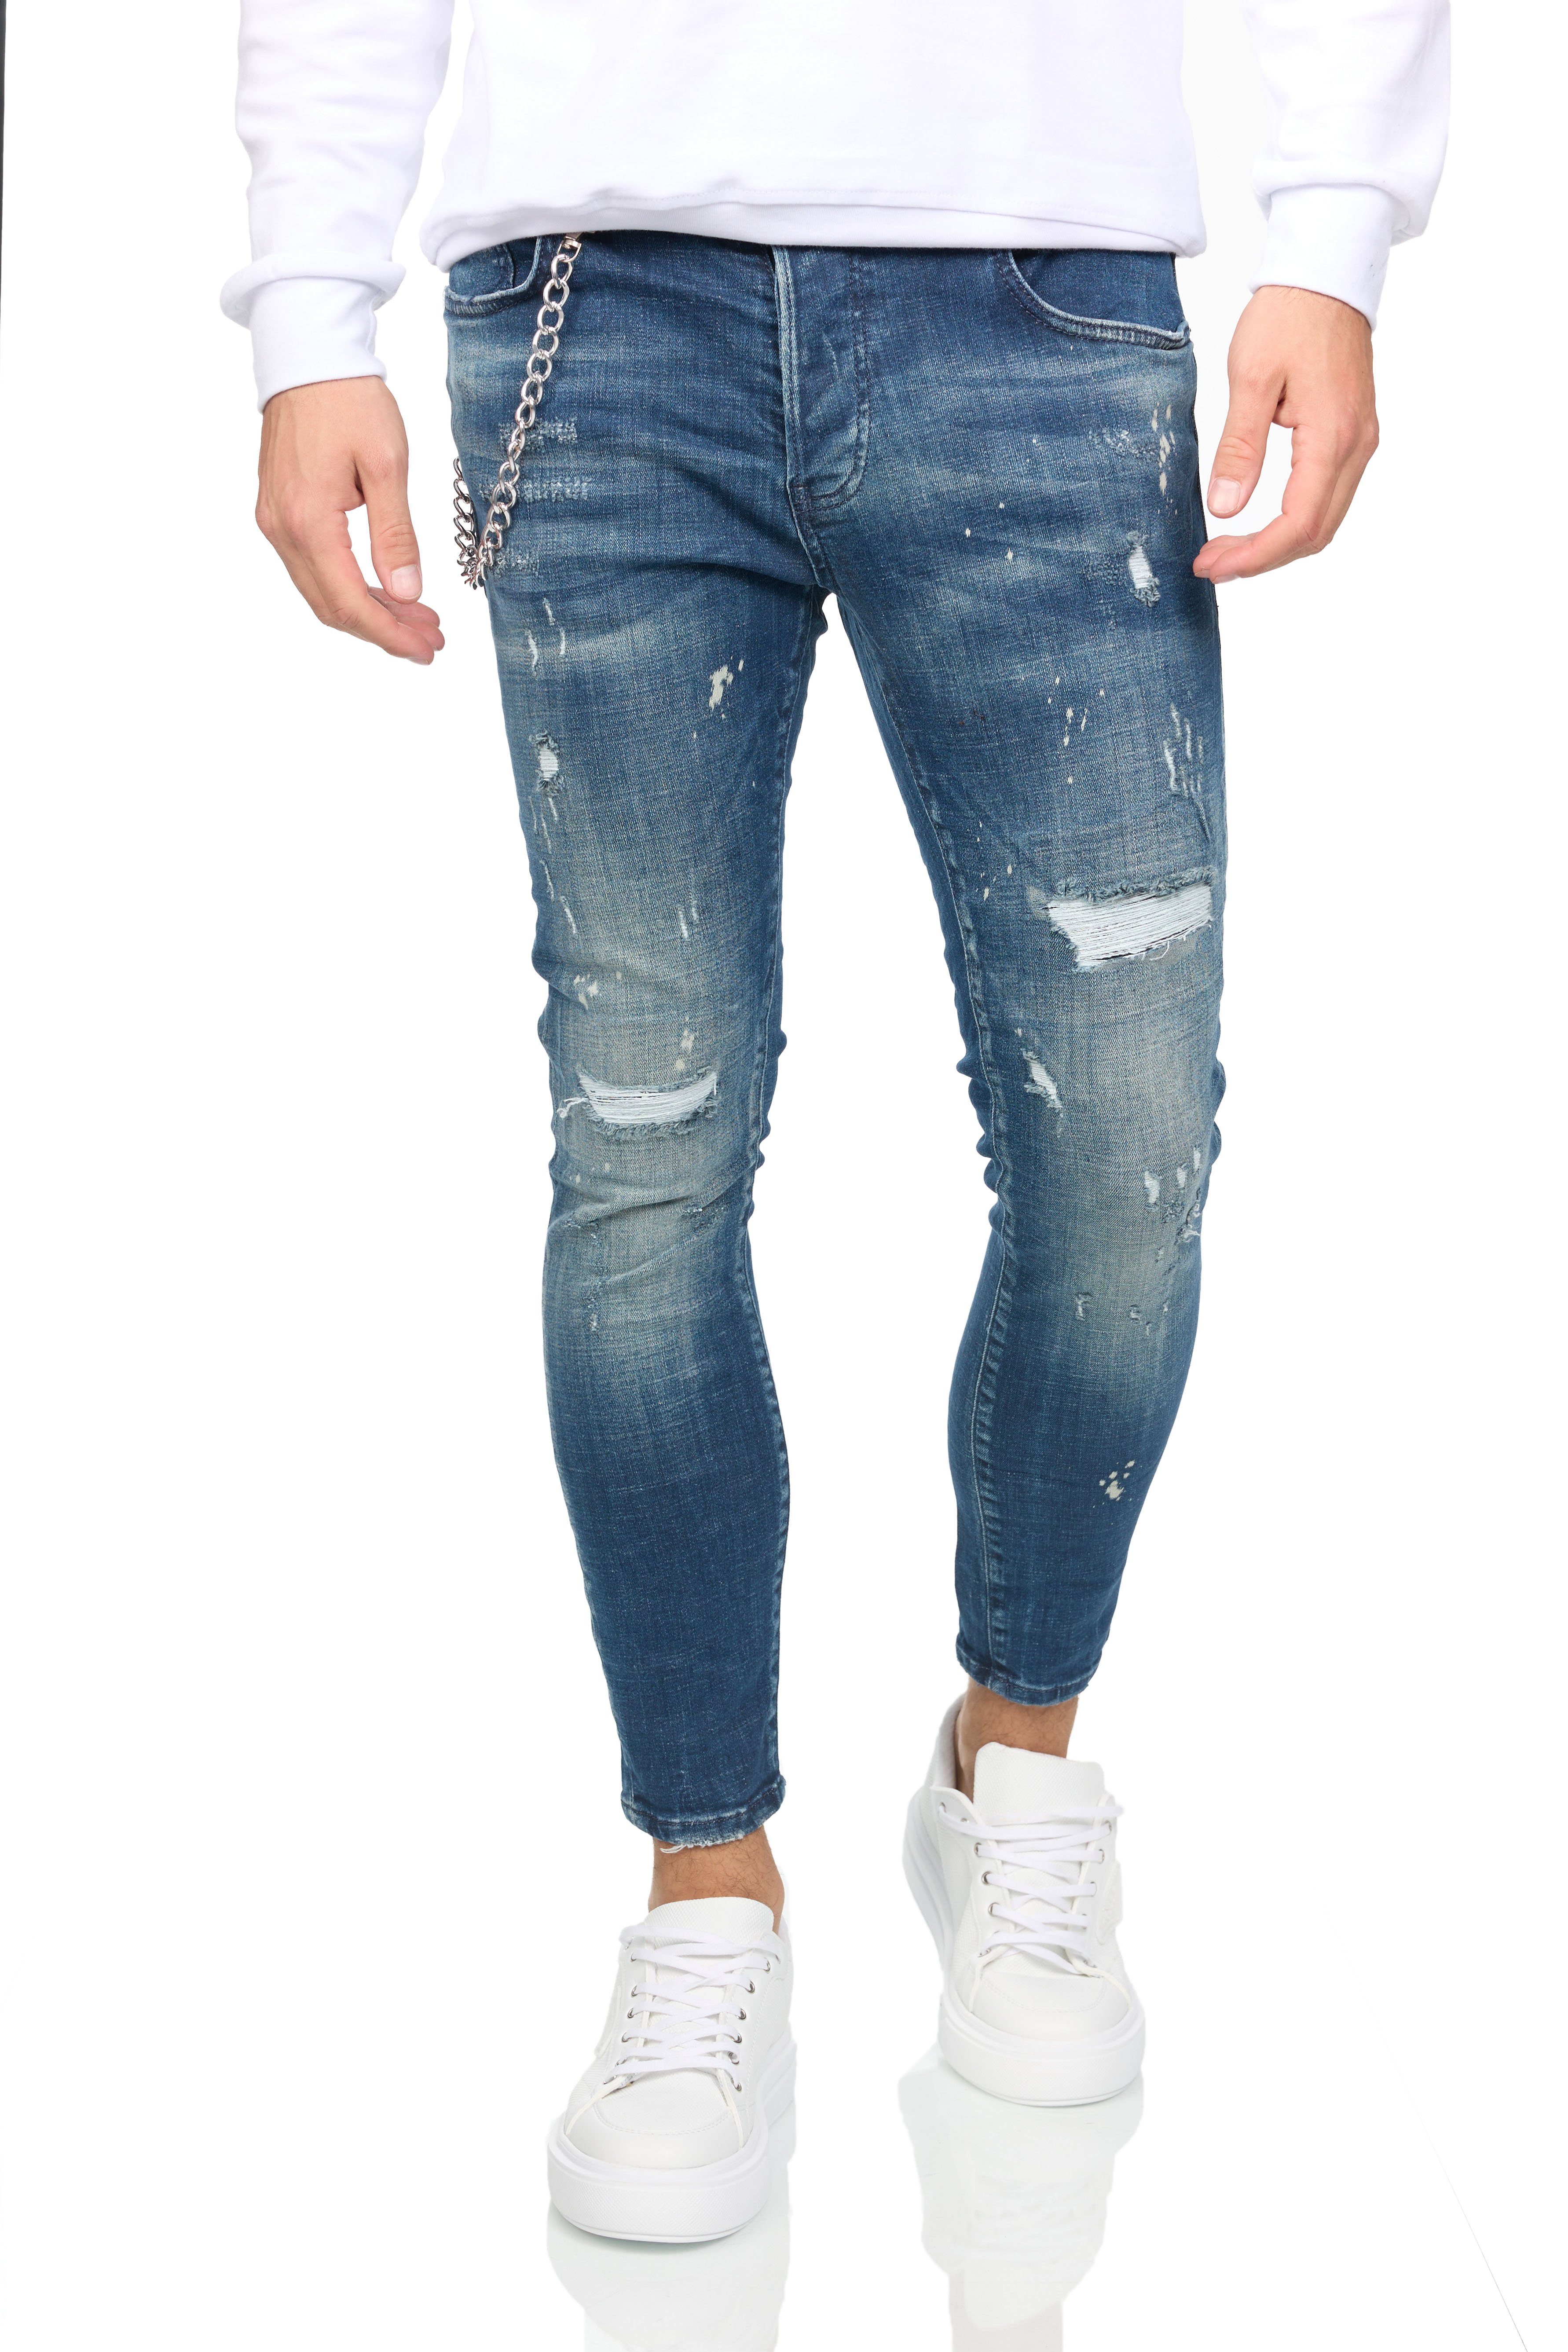 Denim Distriqt Skinny-fit-Jeans Super stretchige Skinny Jeans im Destroyed Look DH-BI 15710 | Skinny Jeans